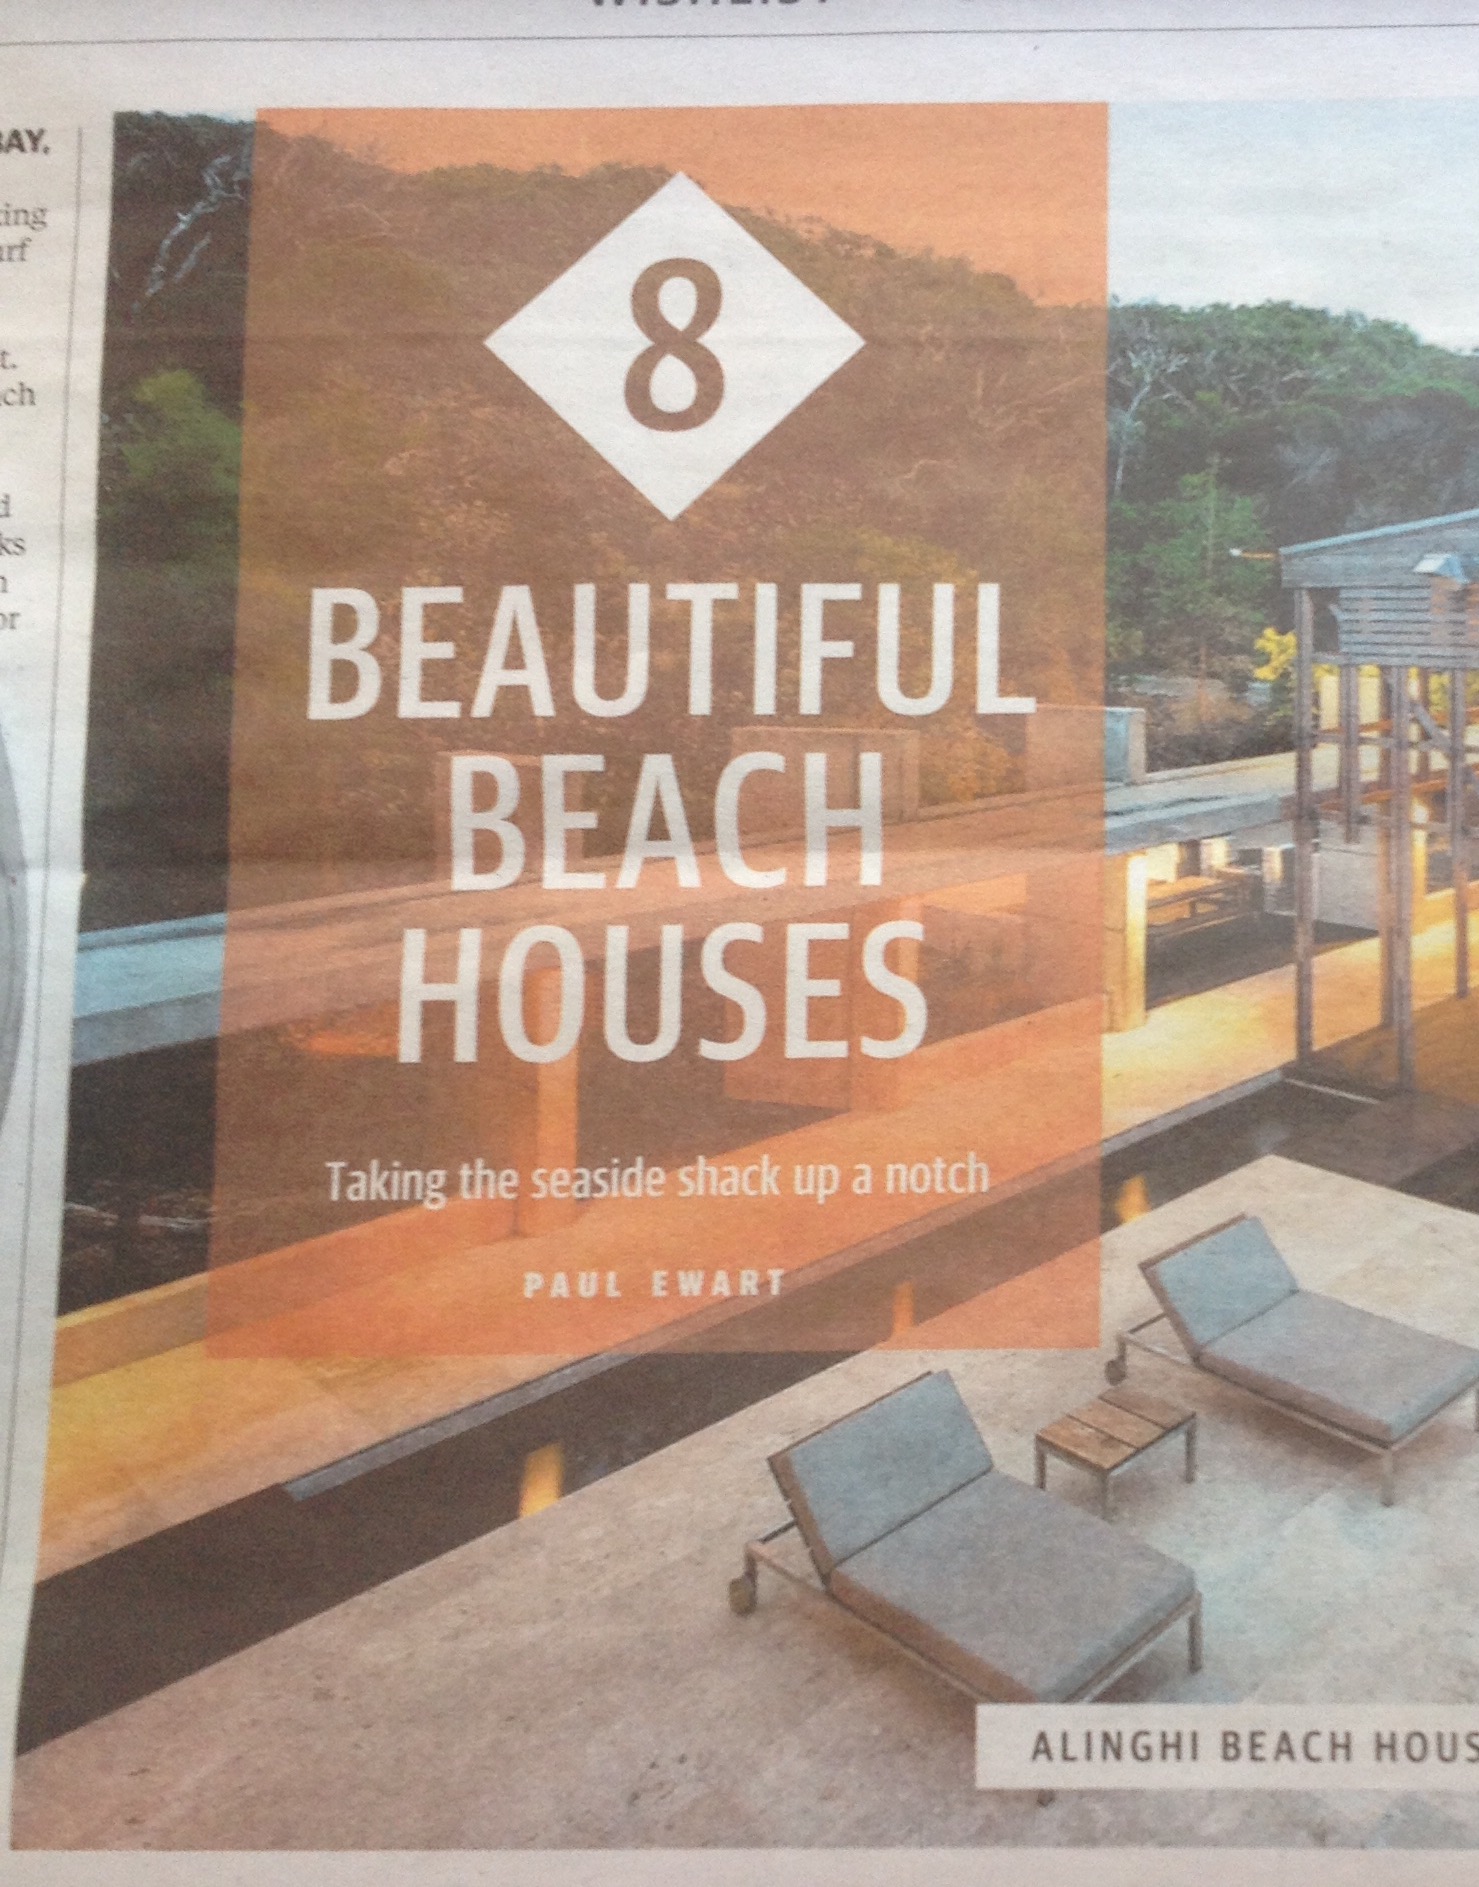 The Sunday Times, 8 Beautiful Beach Houses